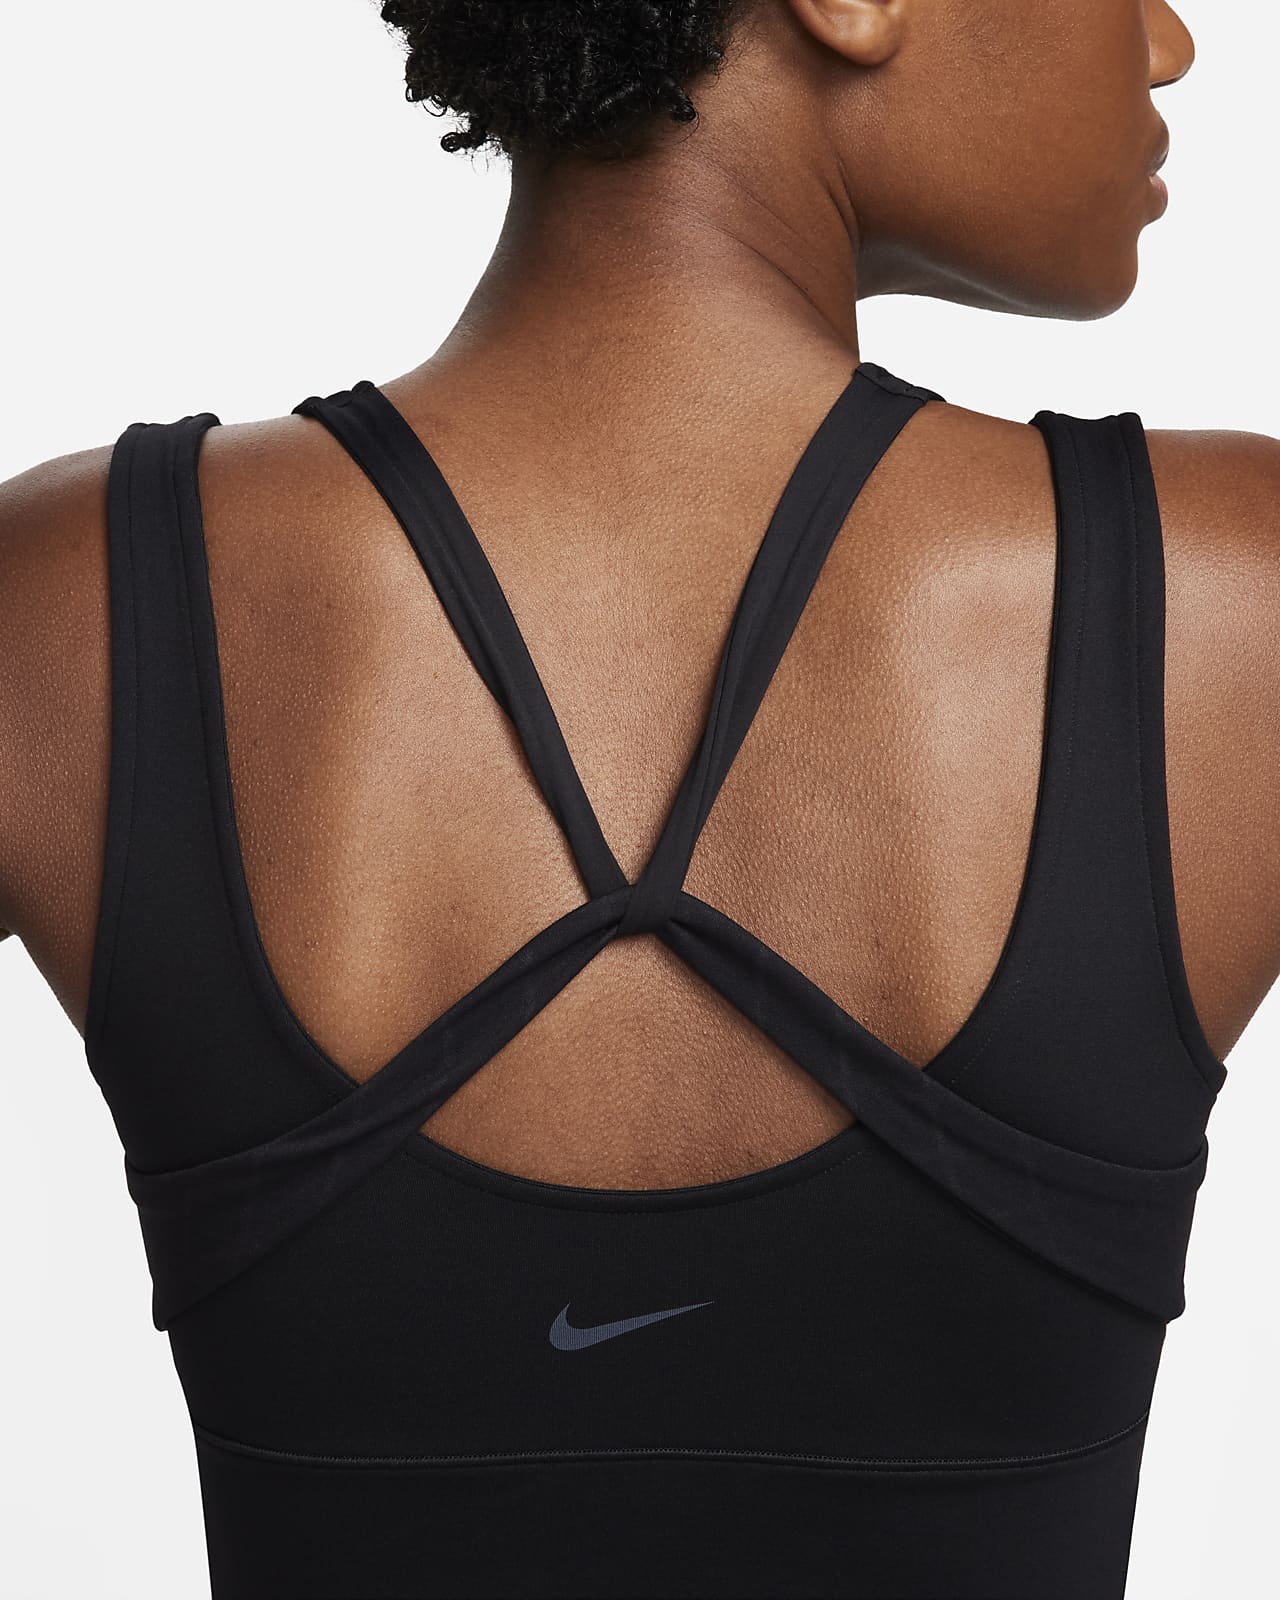 Nike Yoga Luxe Eyelet Shelf-bra Tank in White